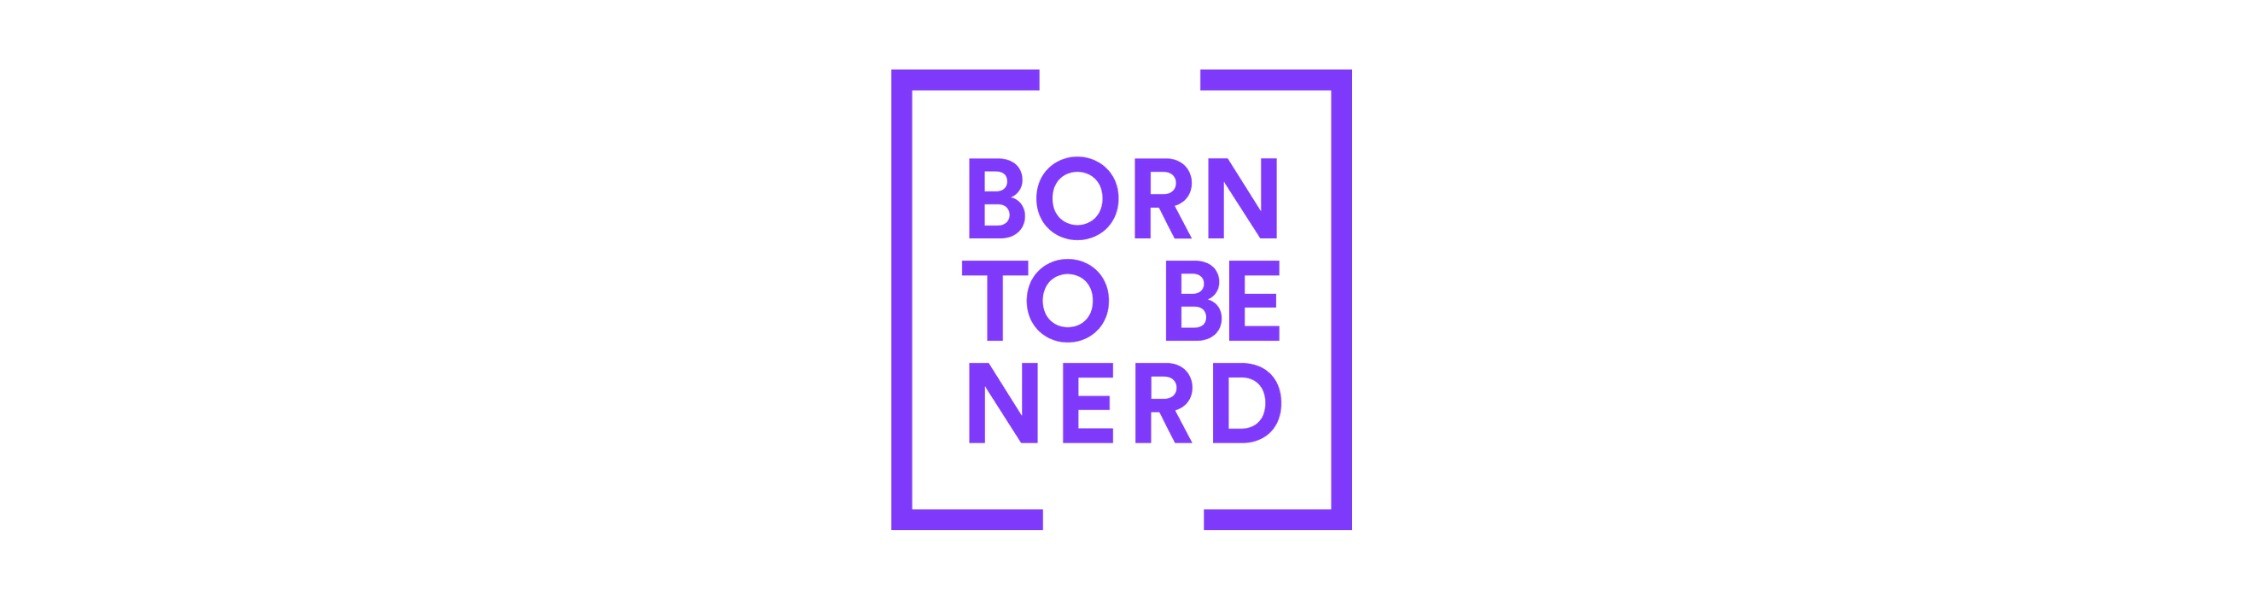 born to be nerd